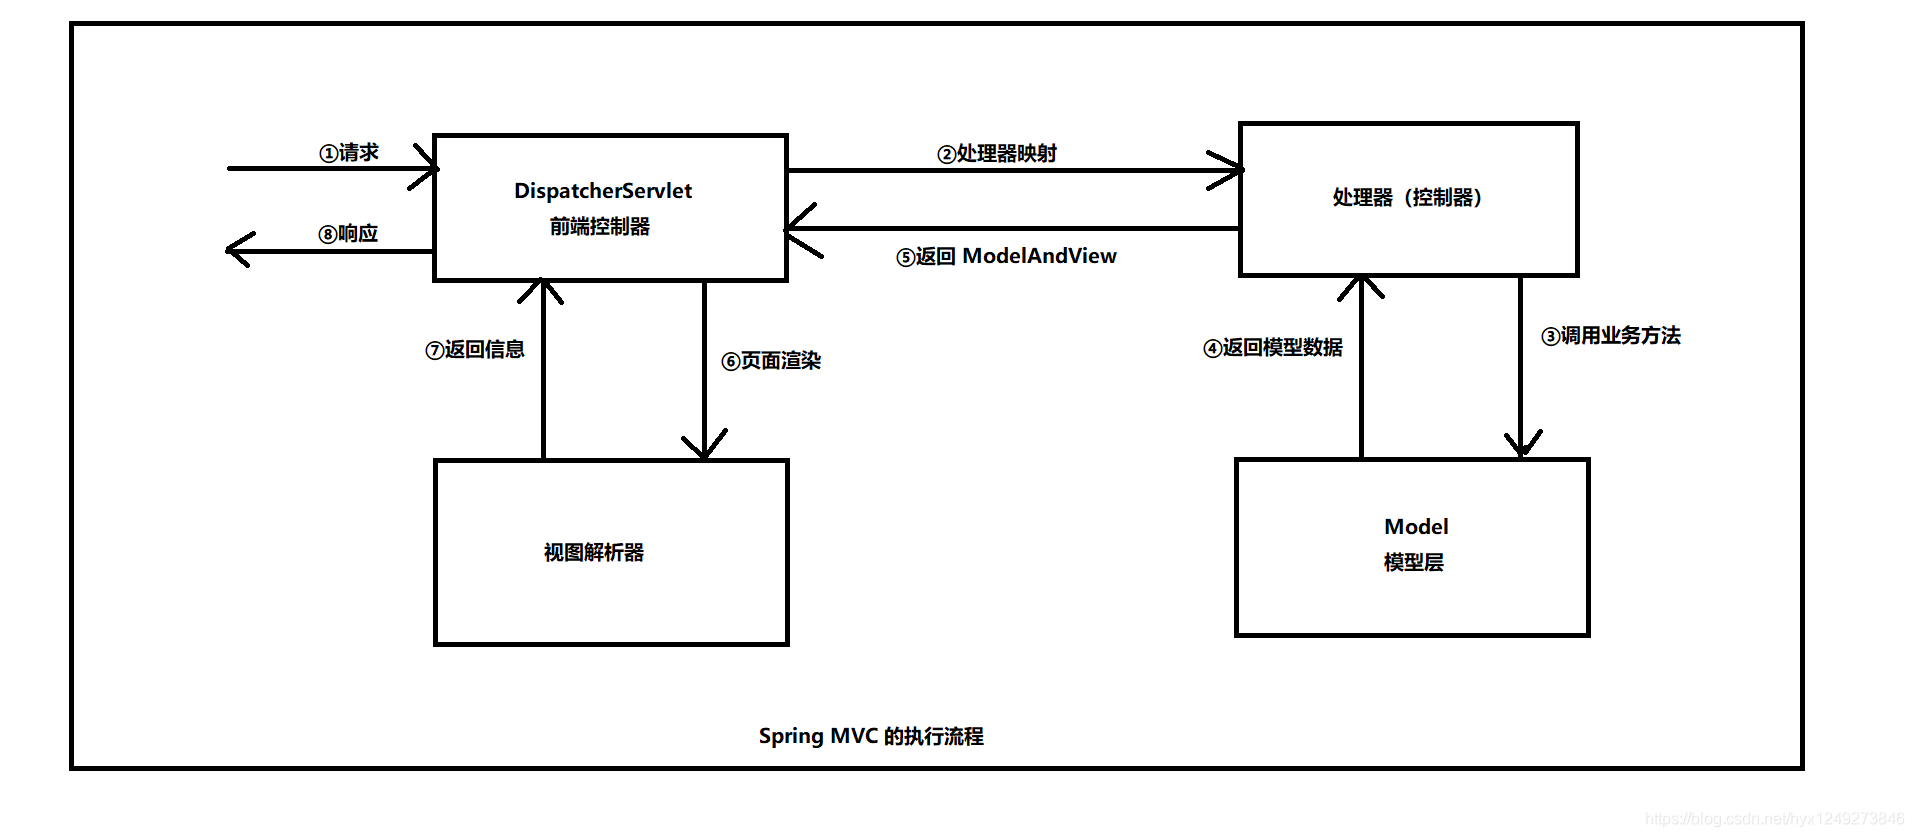 Spring MVC 的执行流程